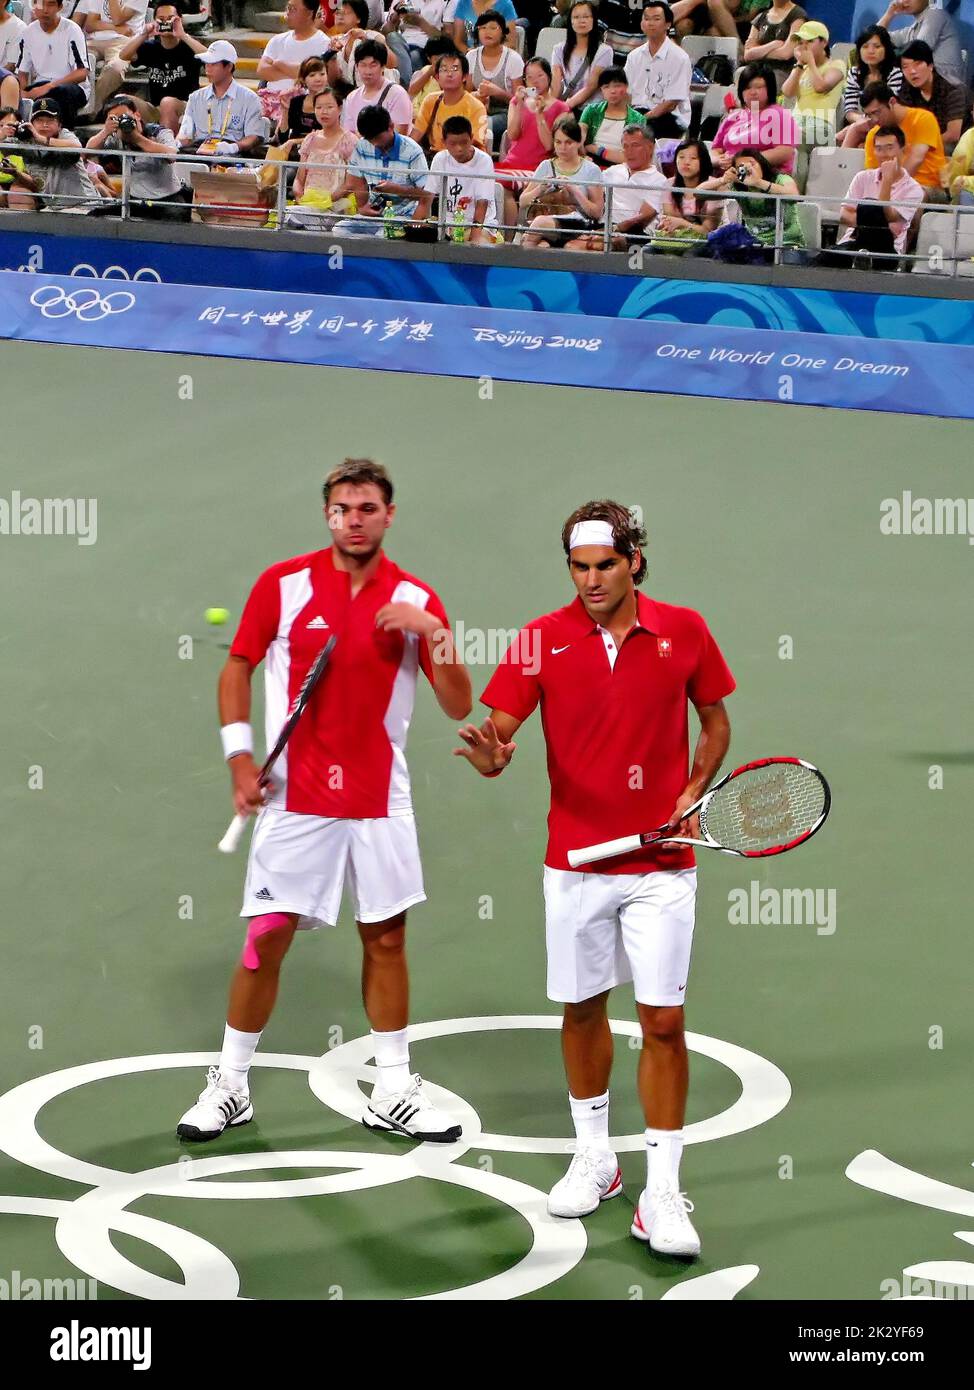 Roger Federer et Stan Wawrinka aux Jeux Olympiques de Beijing en 2008 Banque D'Images